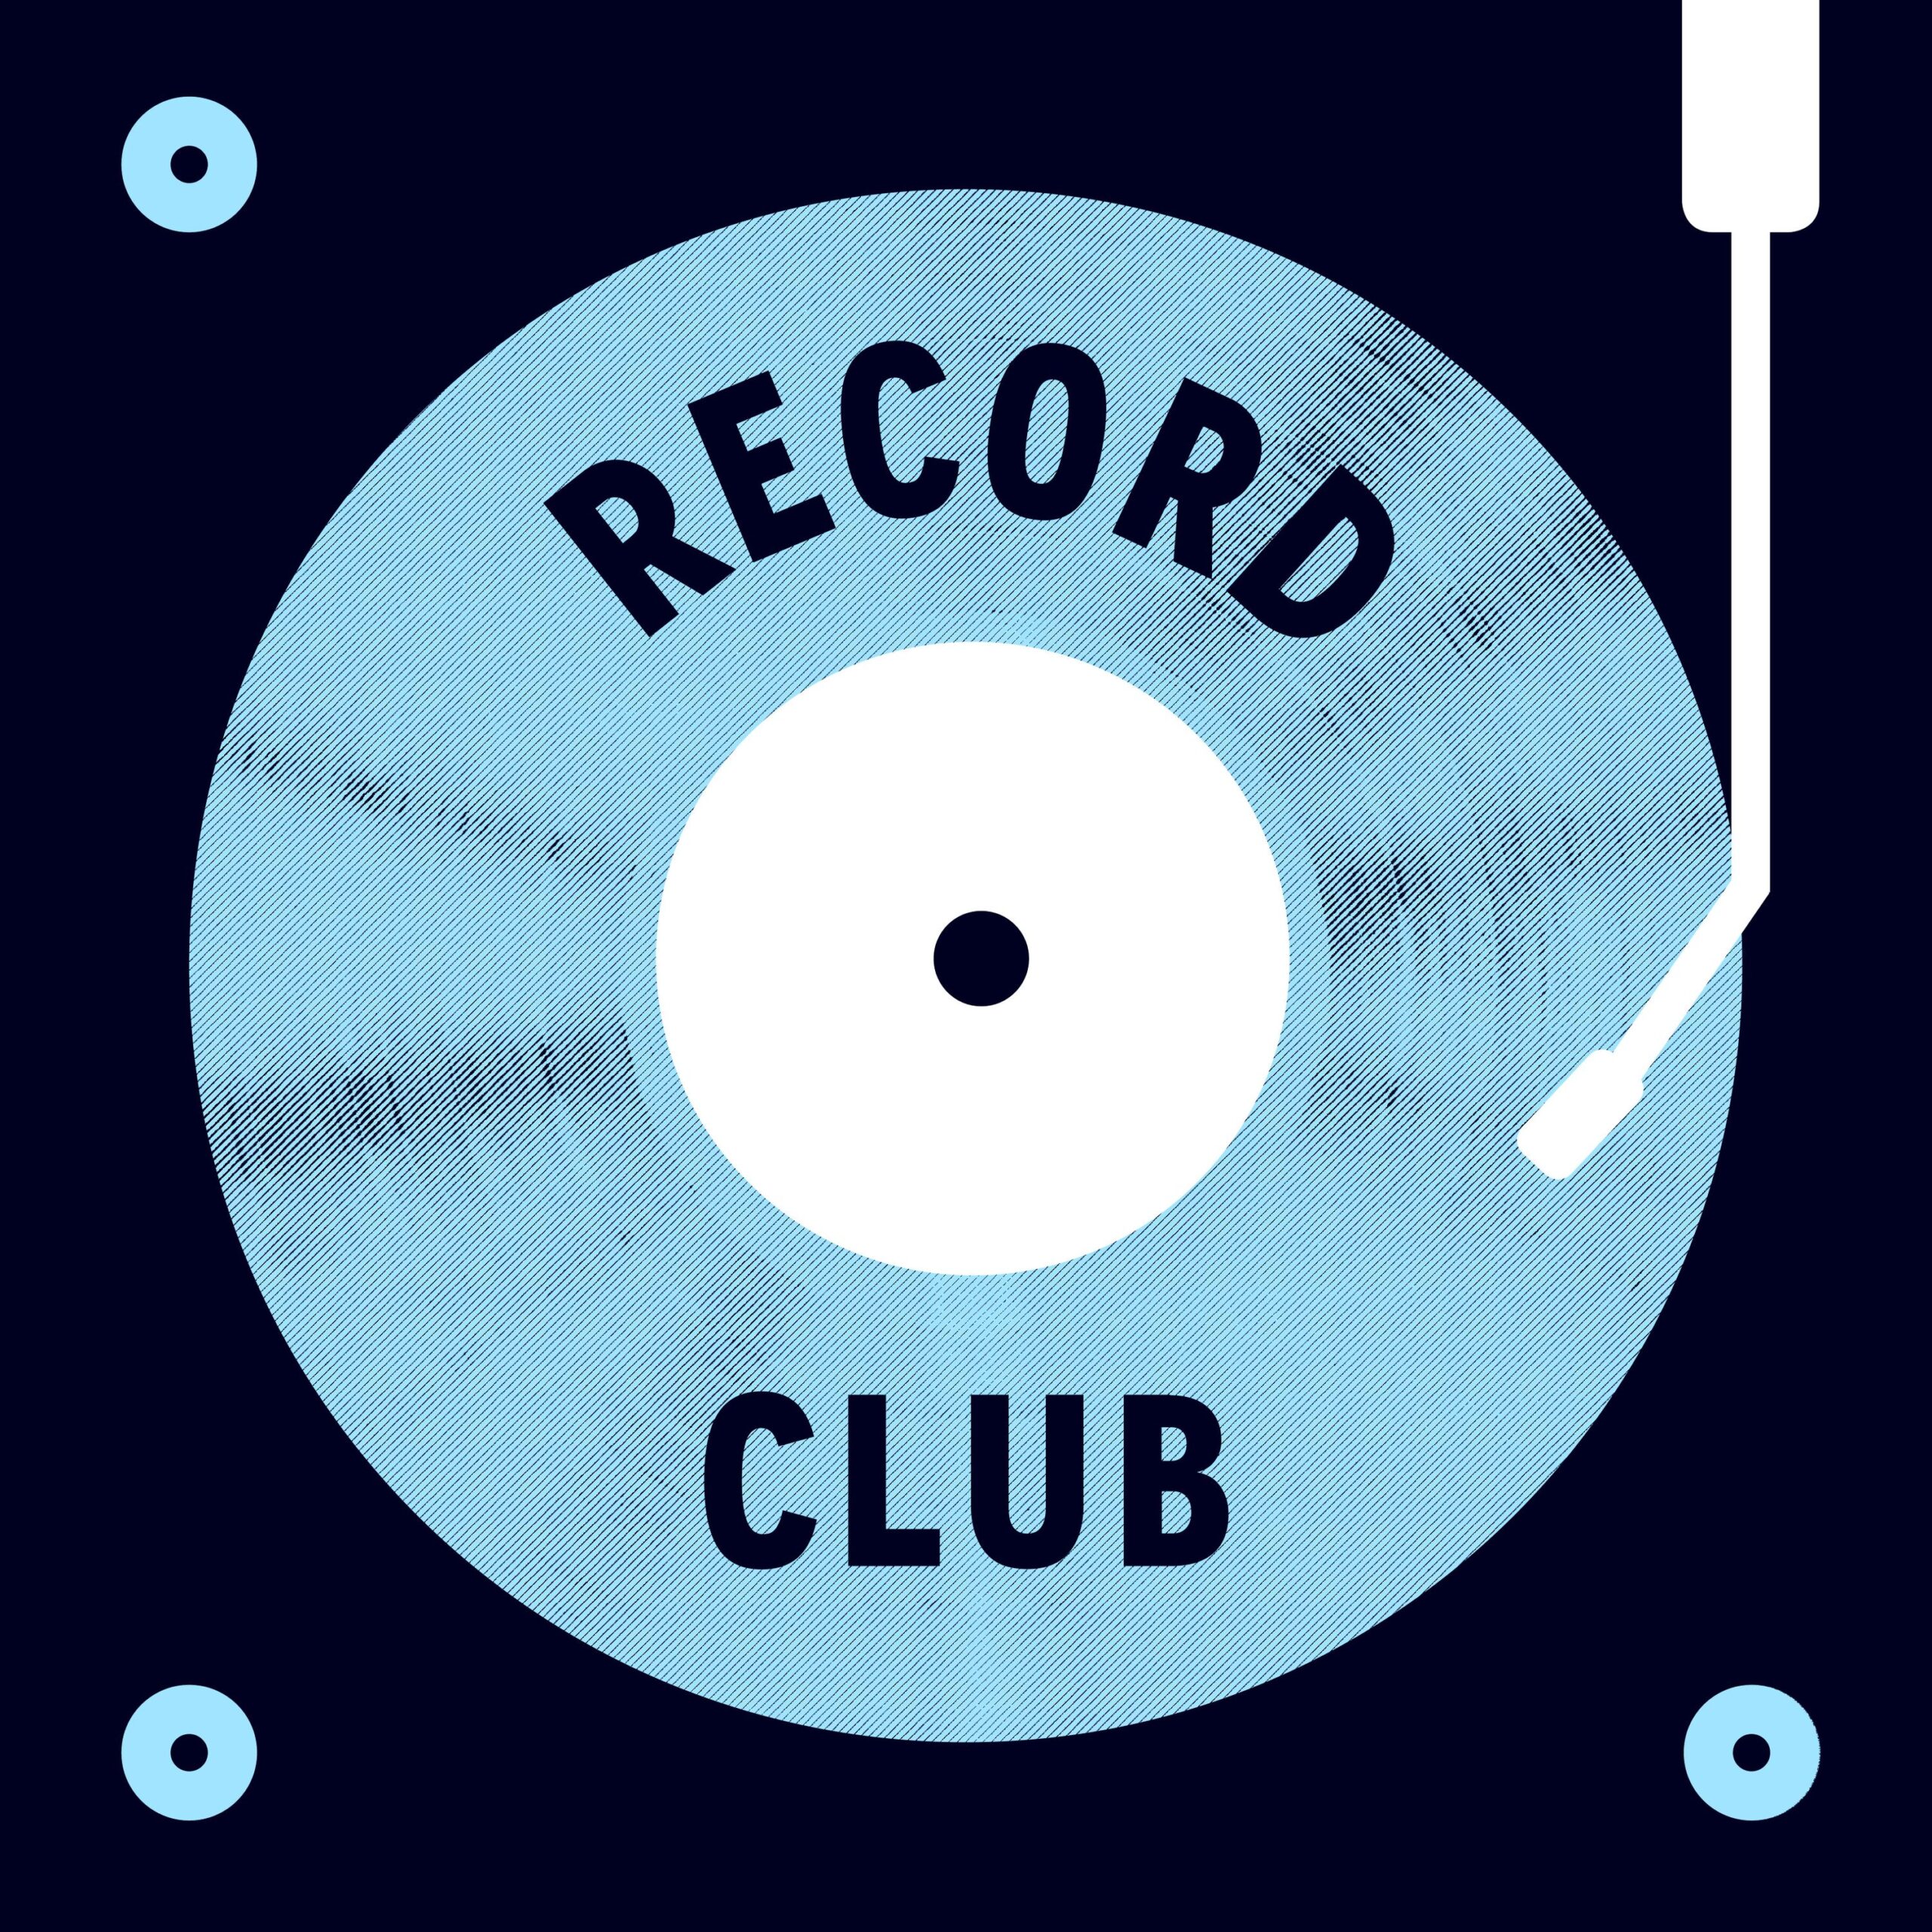 Record Club